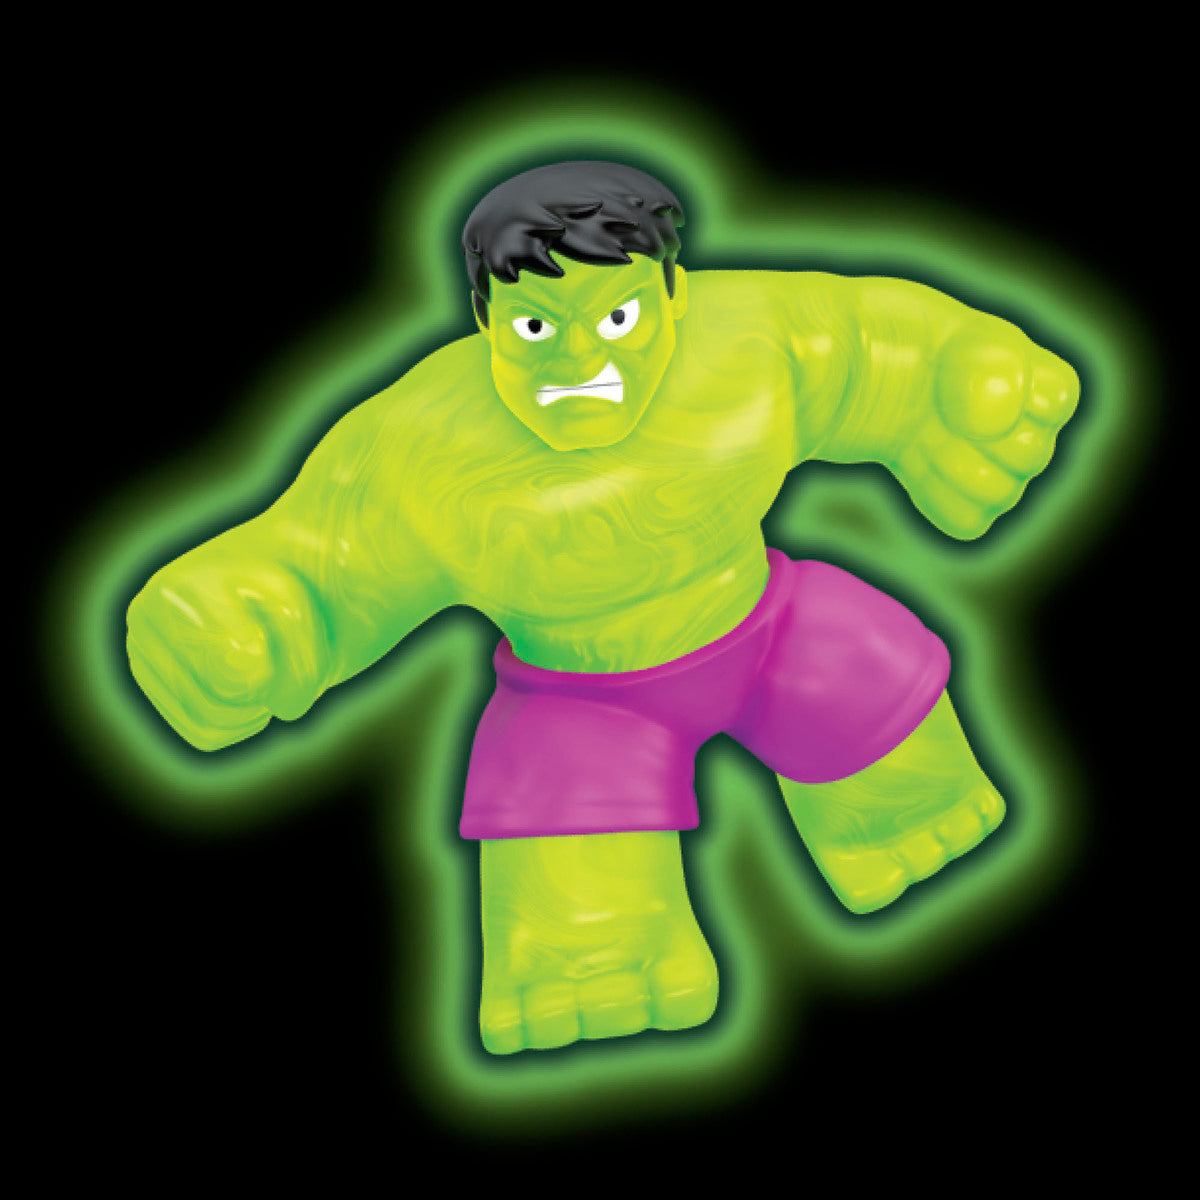 Heroes Of Goo Jit Zu Figure - Marvel Glow Hulk